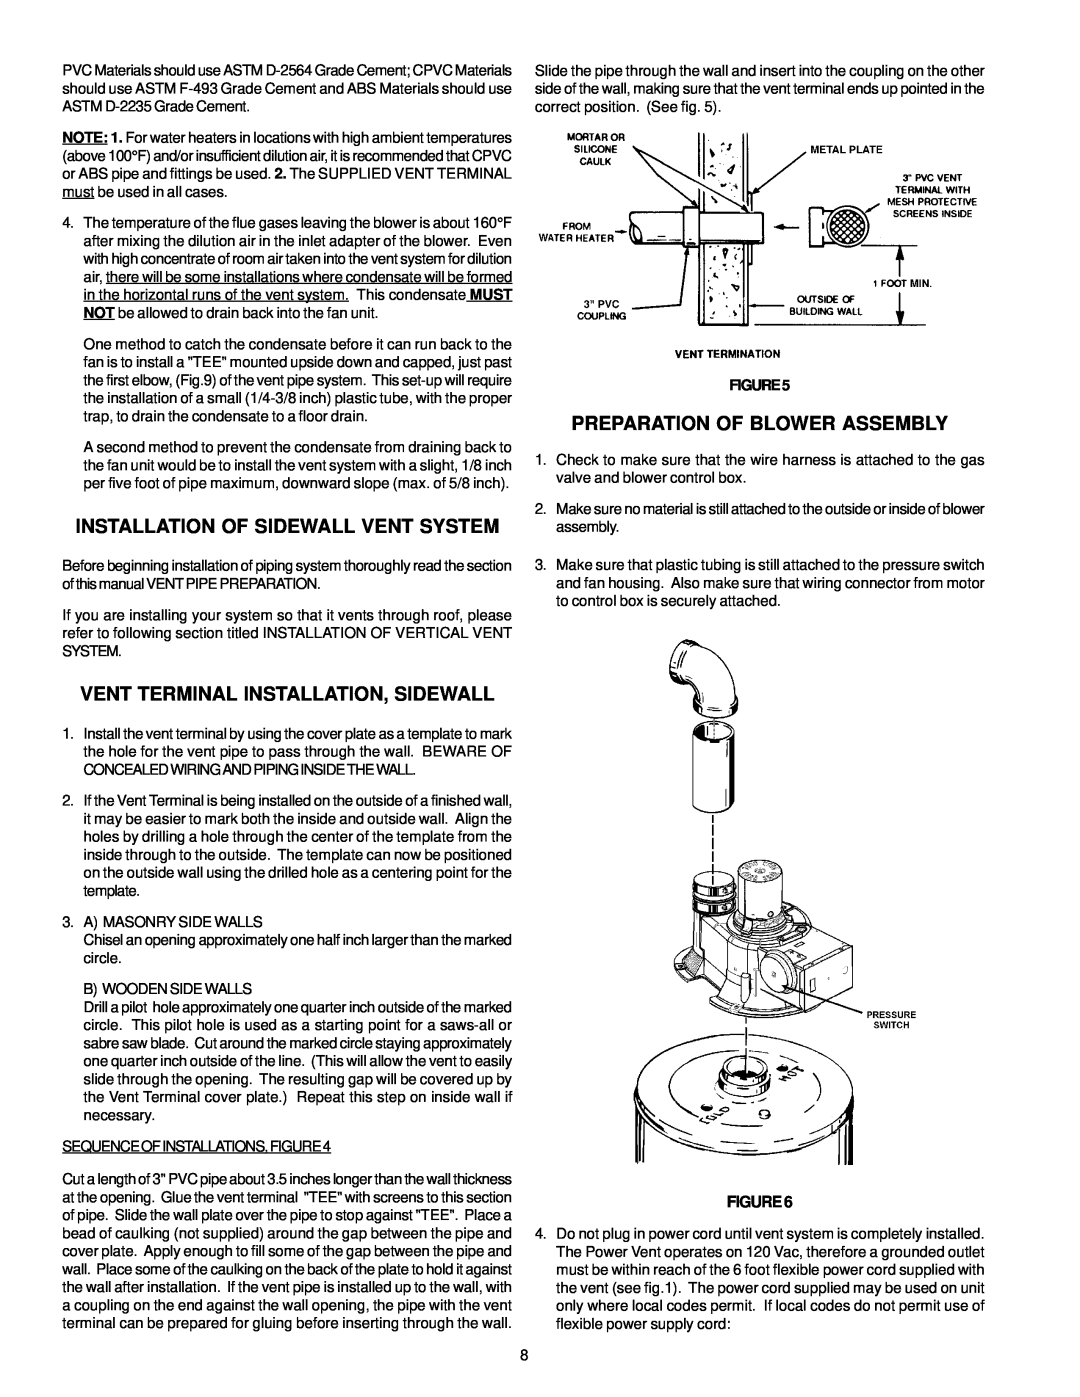 A.O. Smith BTF-75 warranty Installation Of Sidewall Vent System, Vent Terminal Installation, Sidewall 